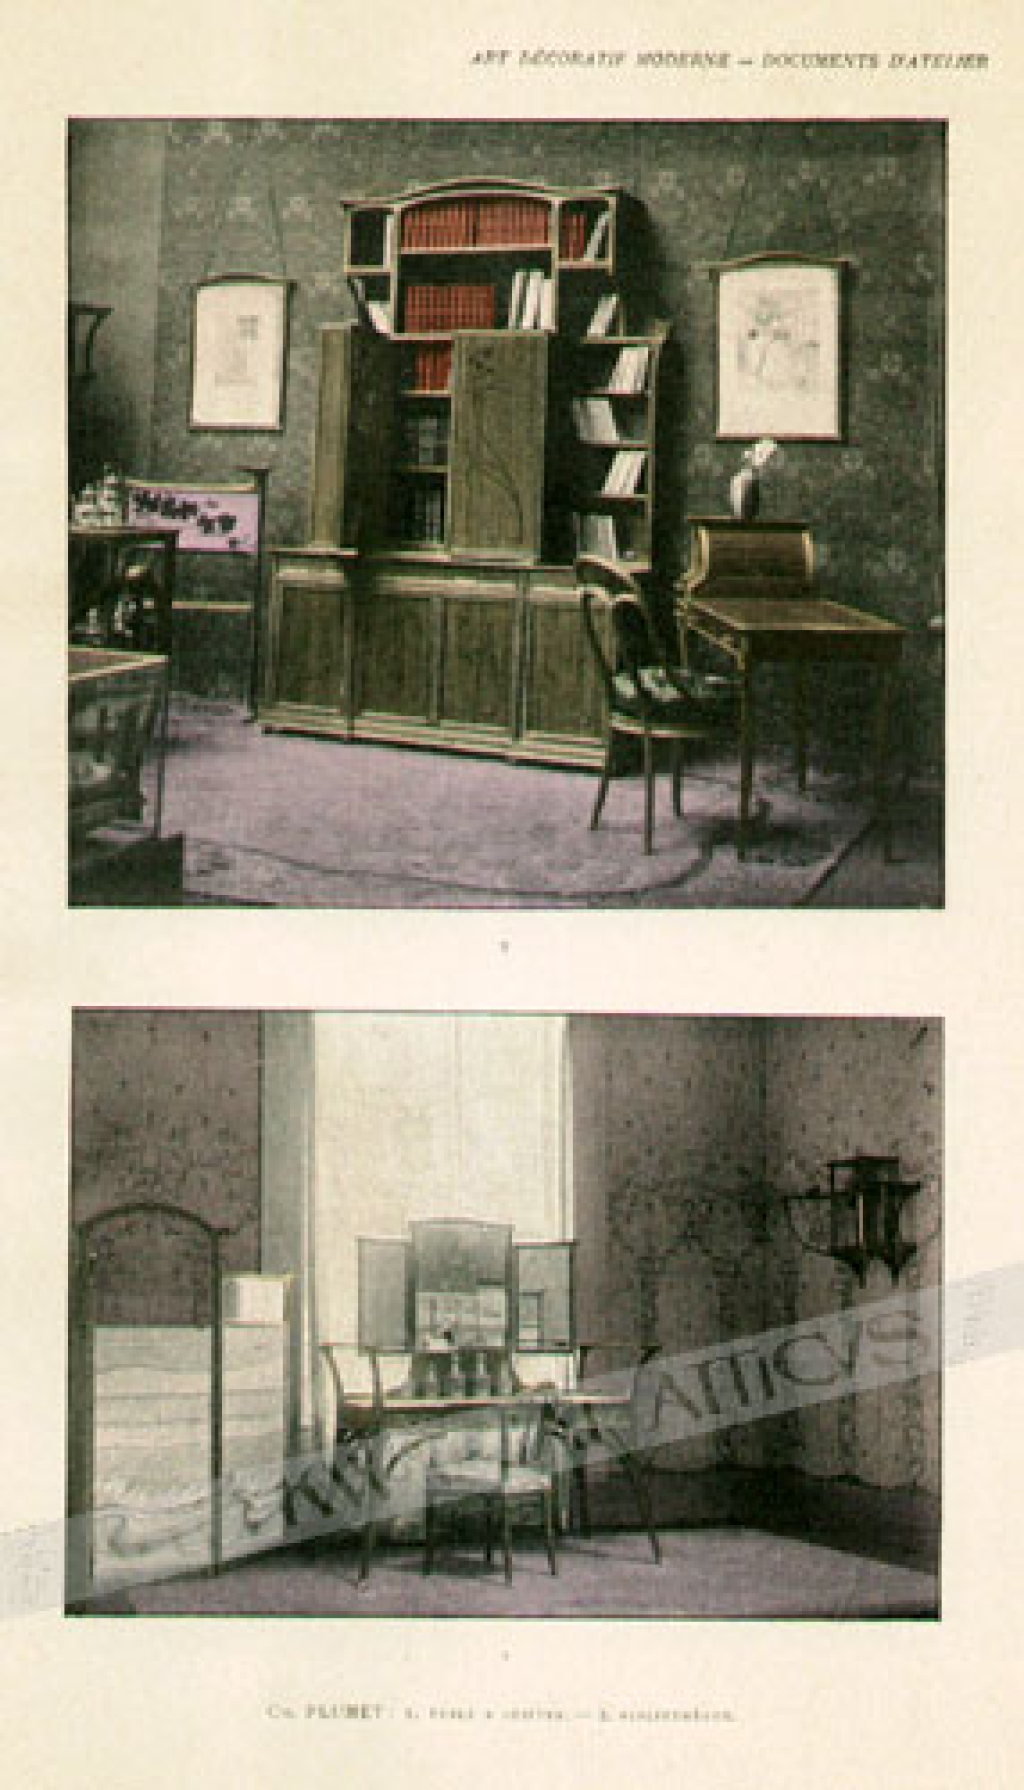 [rycina, ok. 1900] Art Decoratif Moderne - Documents d'Atelier1. Table a Coiffer2. Bibliotheque [wnętrza secesyjne]